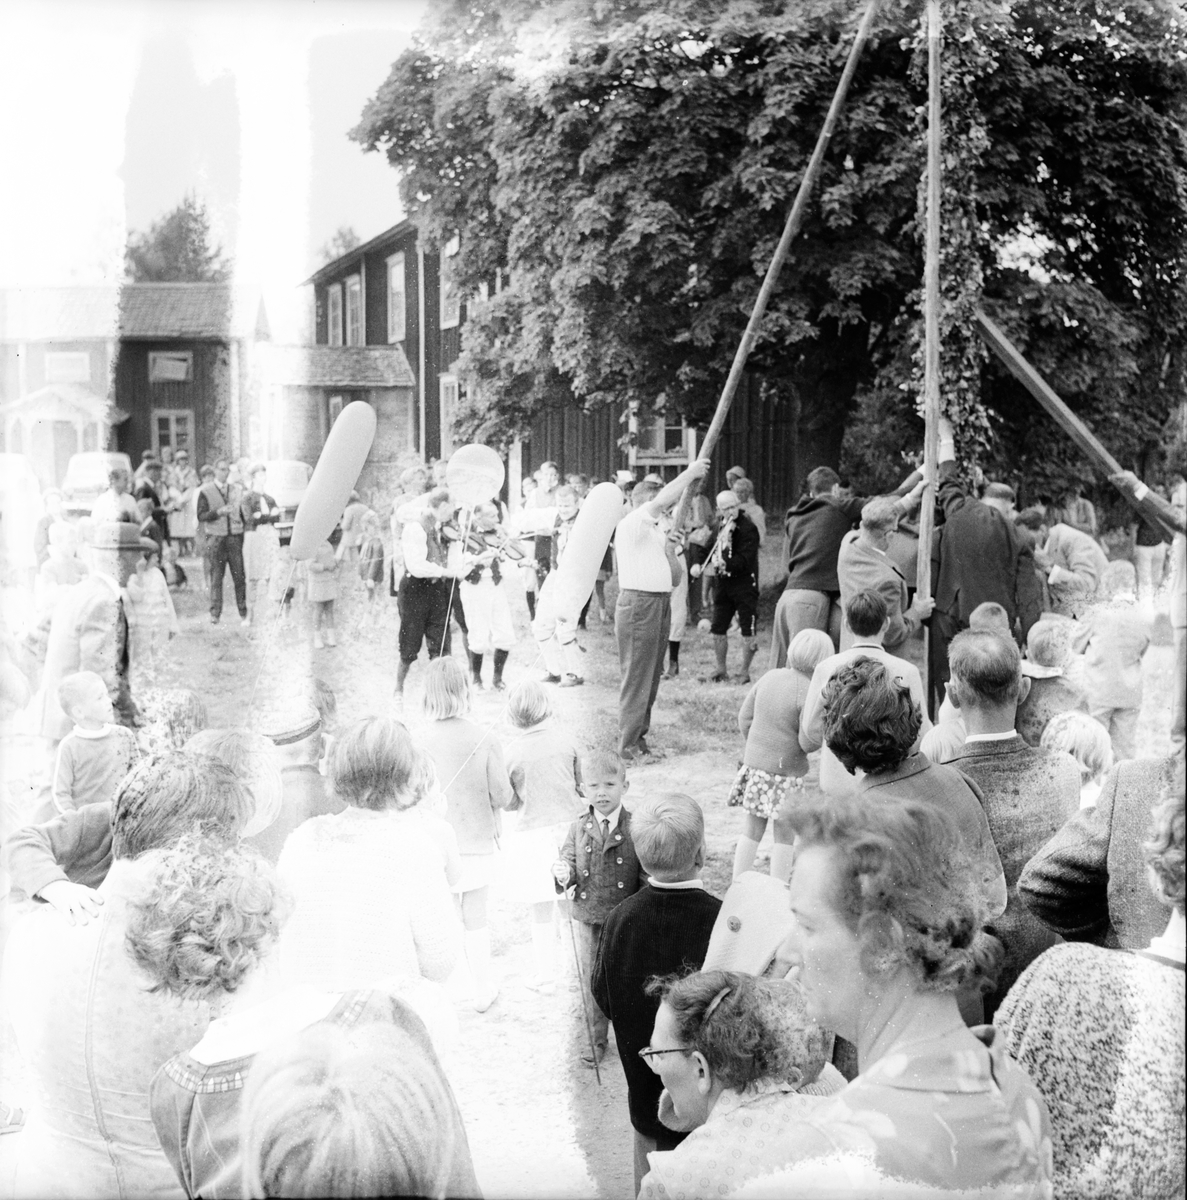 Hårga-logen,
Midsommarfest,
24 Juni 1966